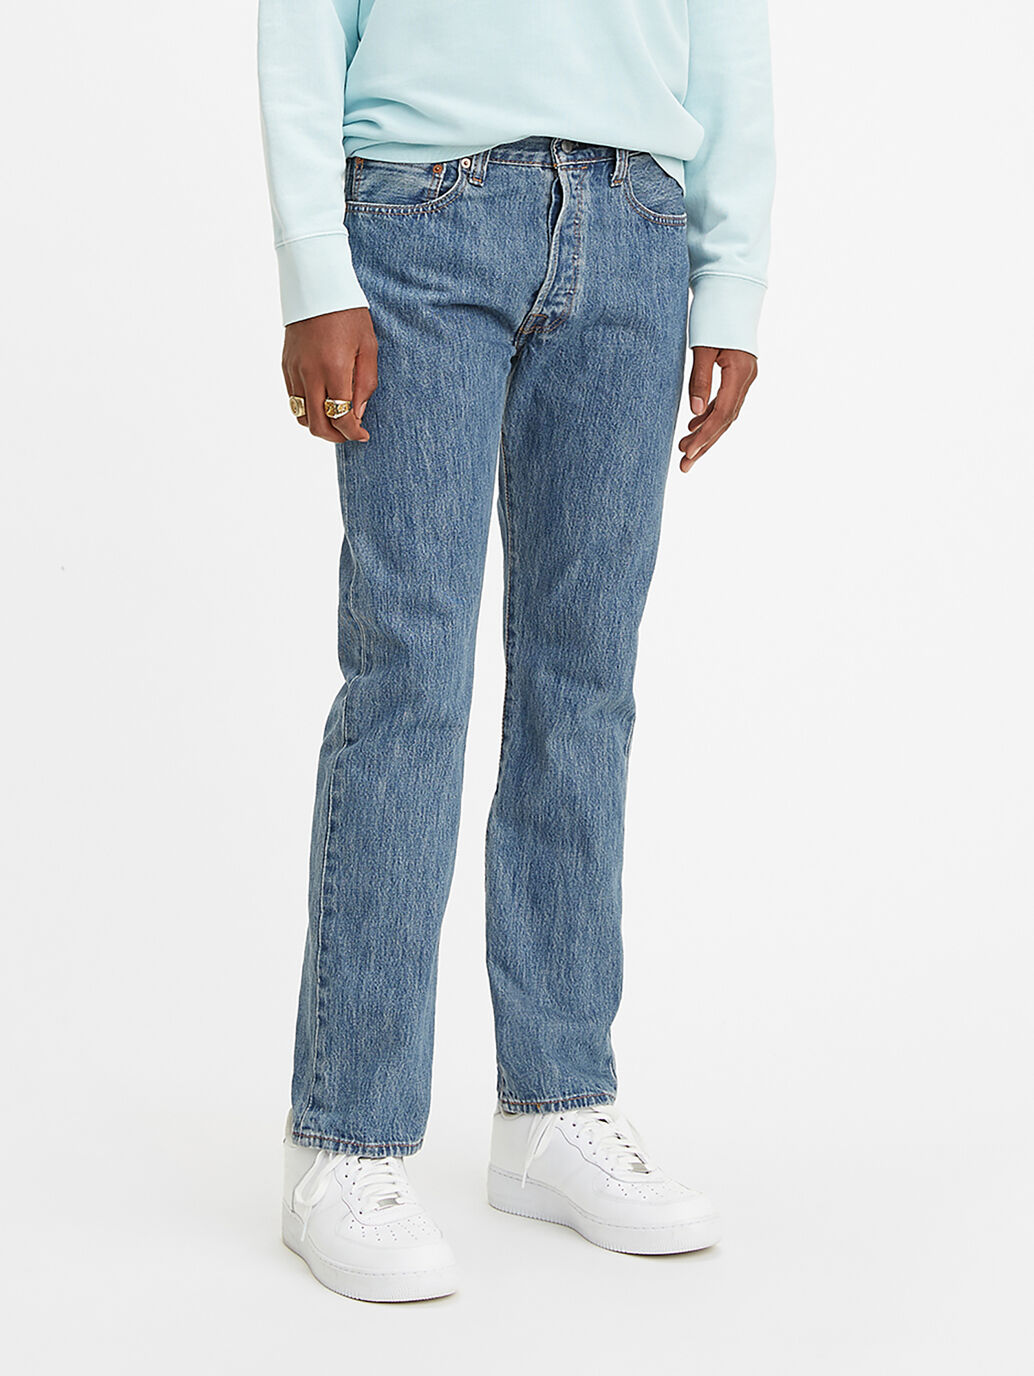 levi's 501 original straight jeans stonewash